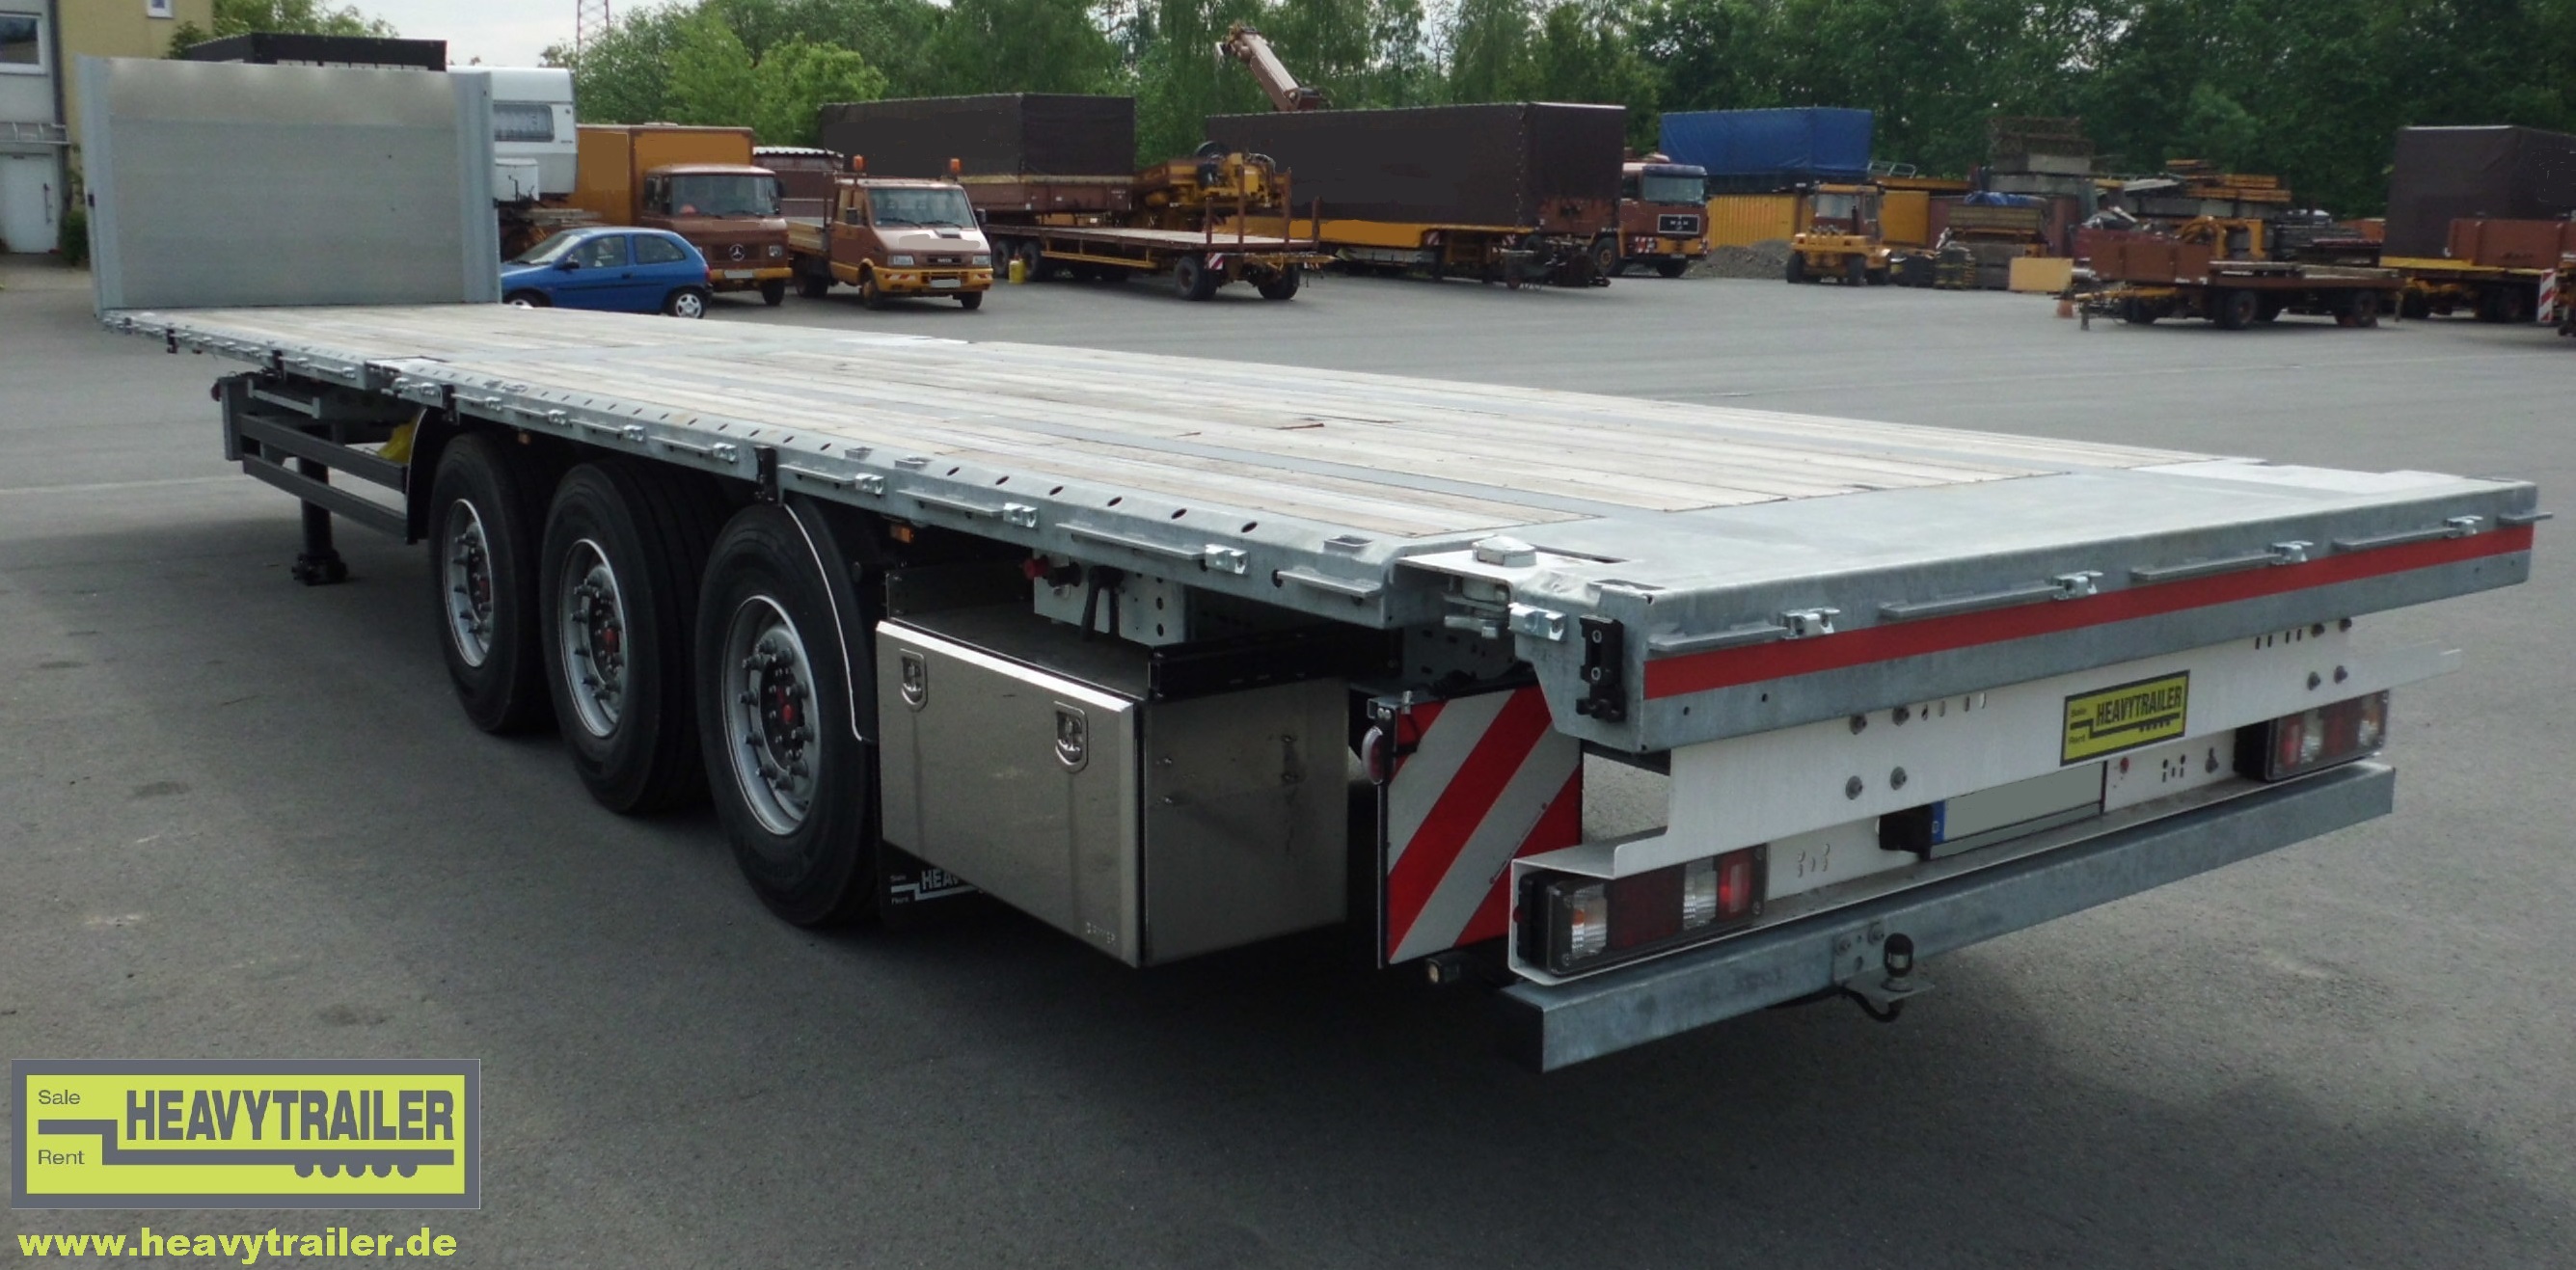 Heavytrailer 3-axle-plateau-trailer (building material)